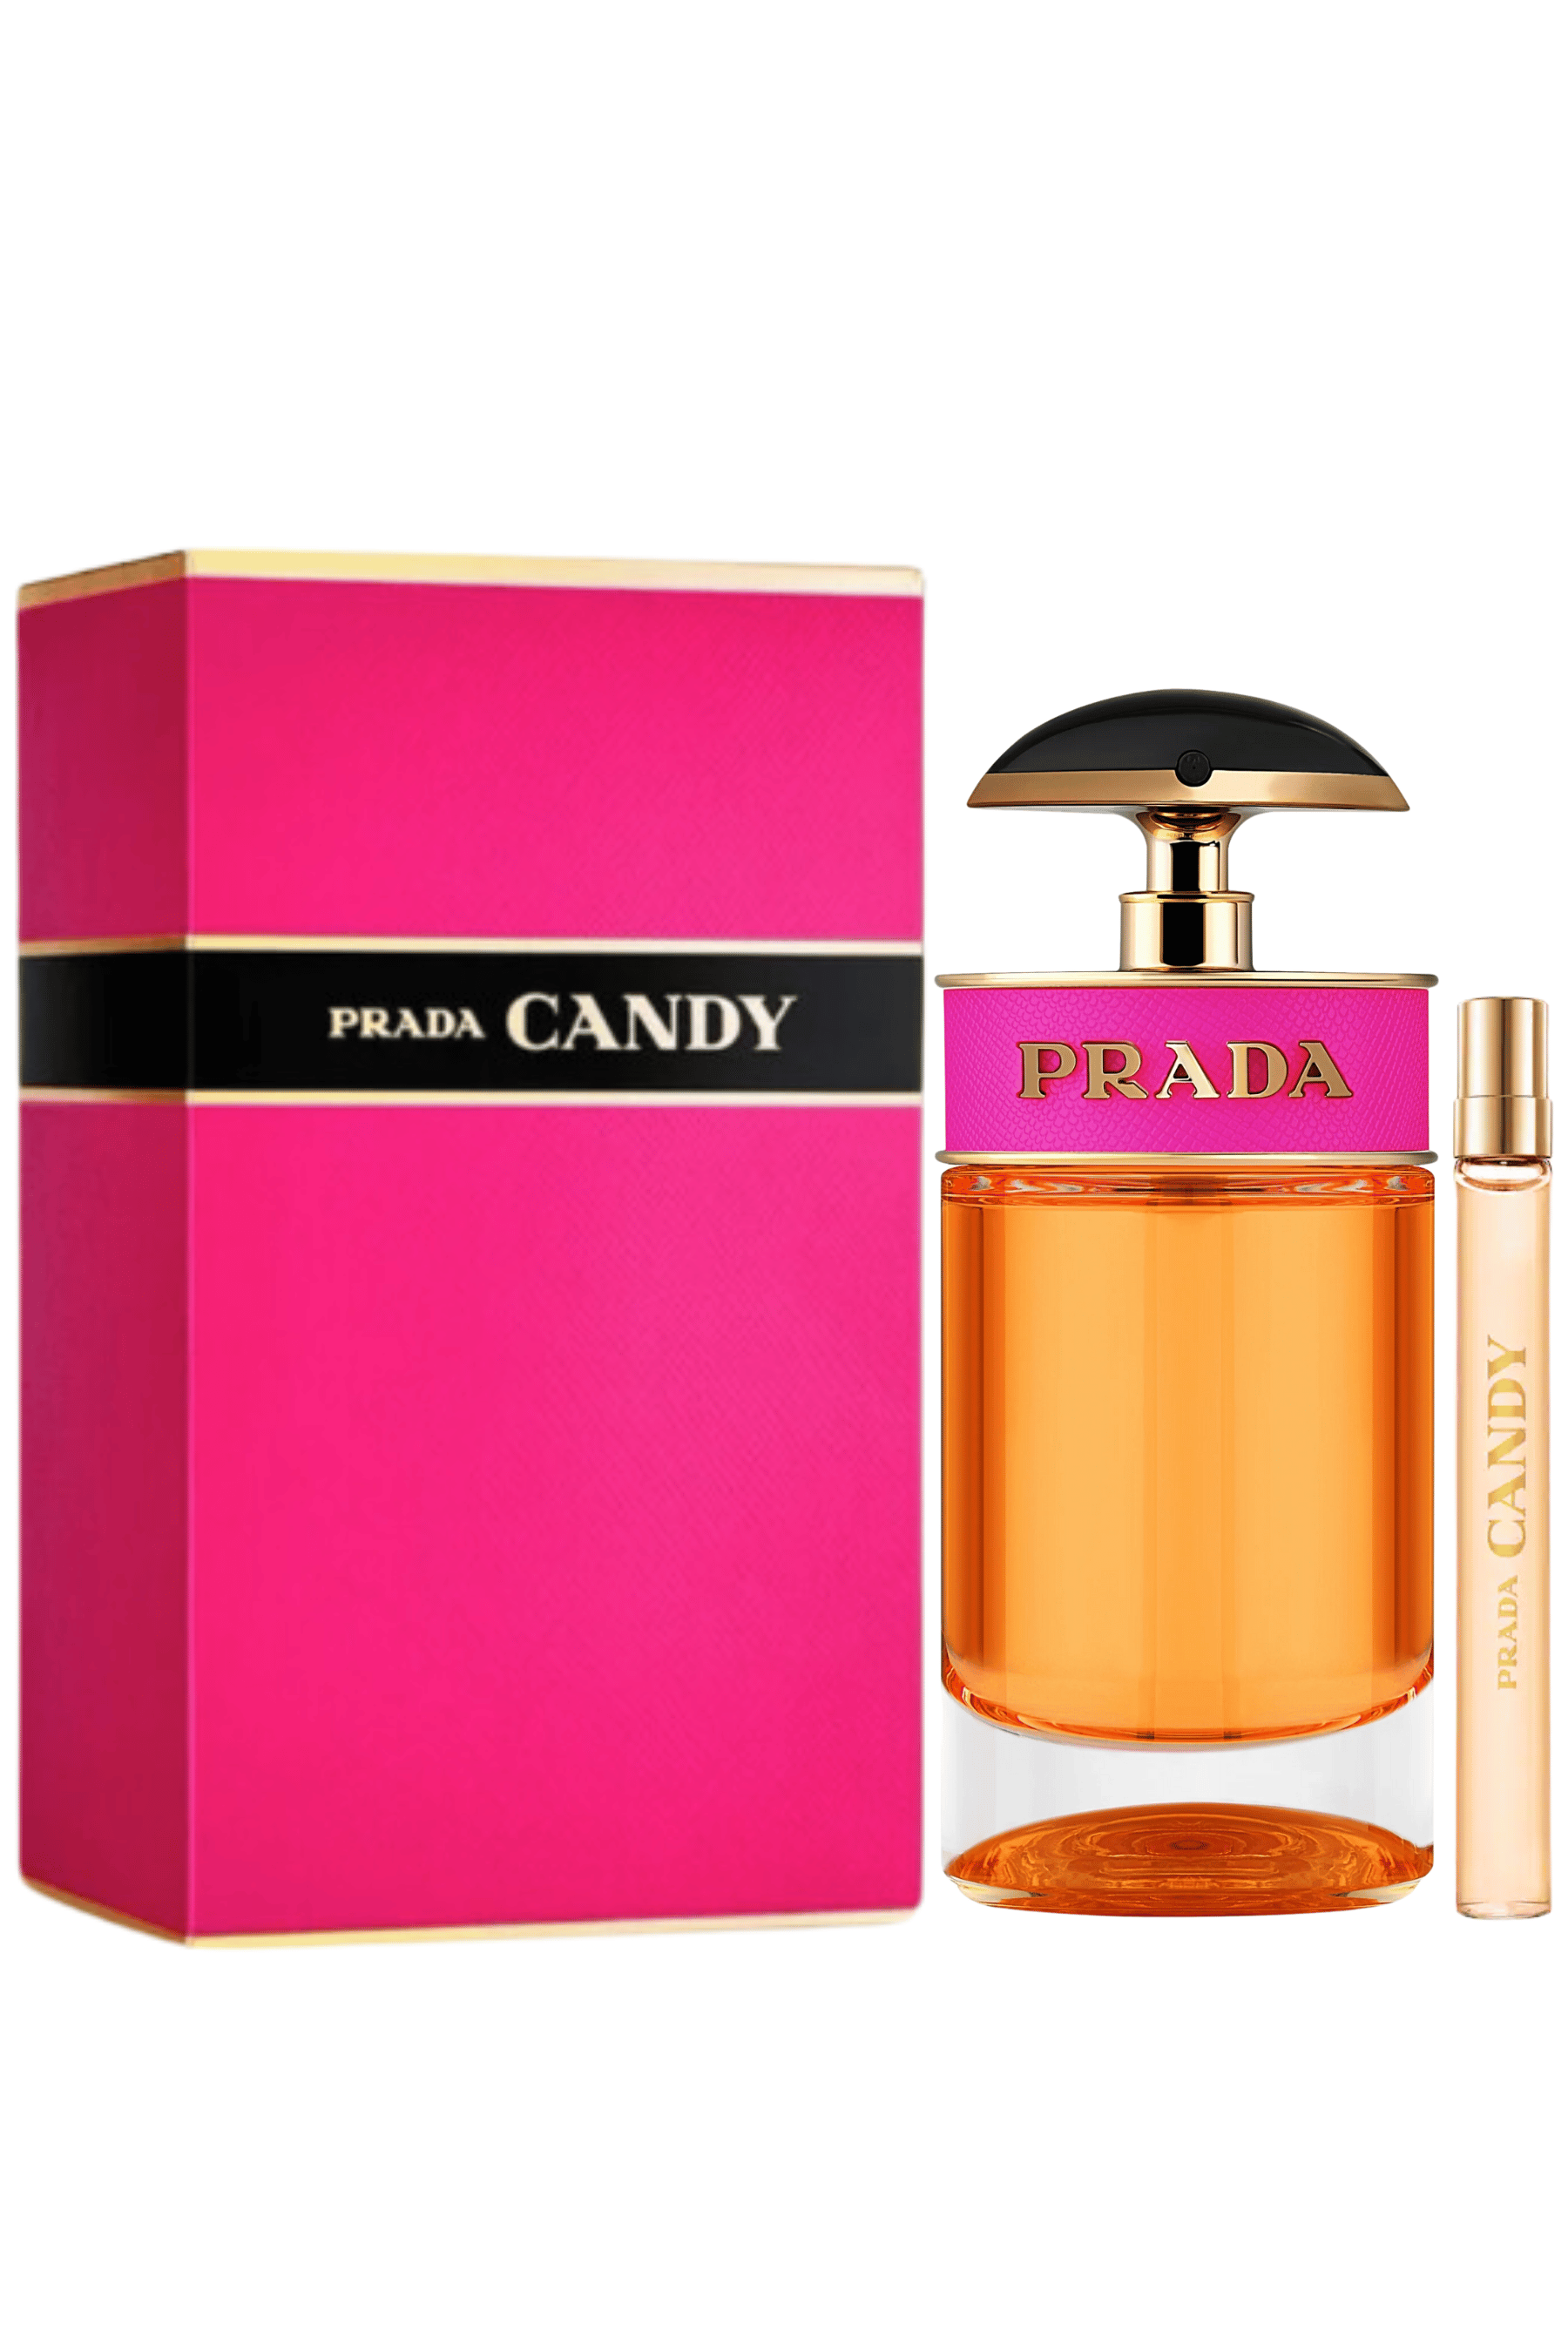 Prada Candy | Eau de Parfum Travel Exclusive Set